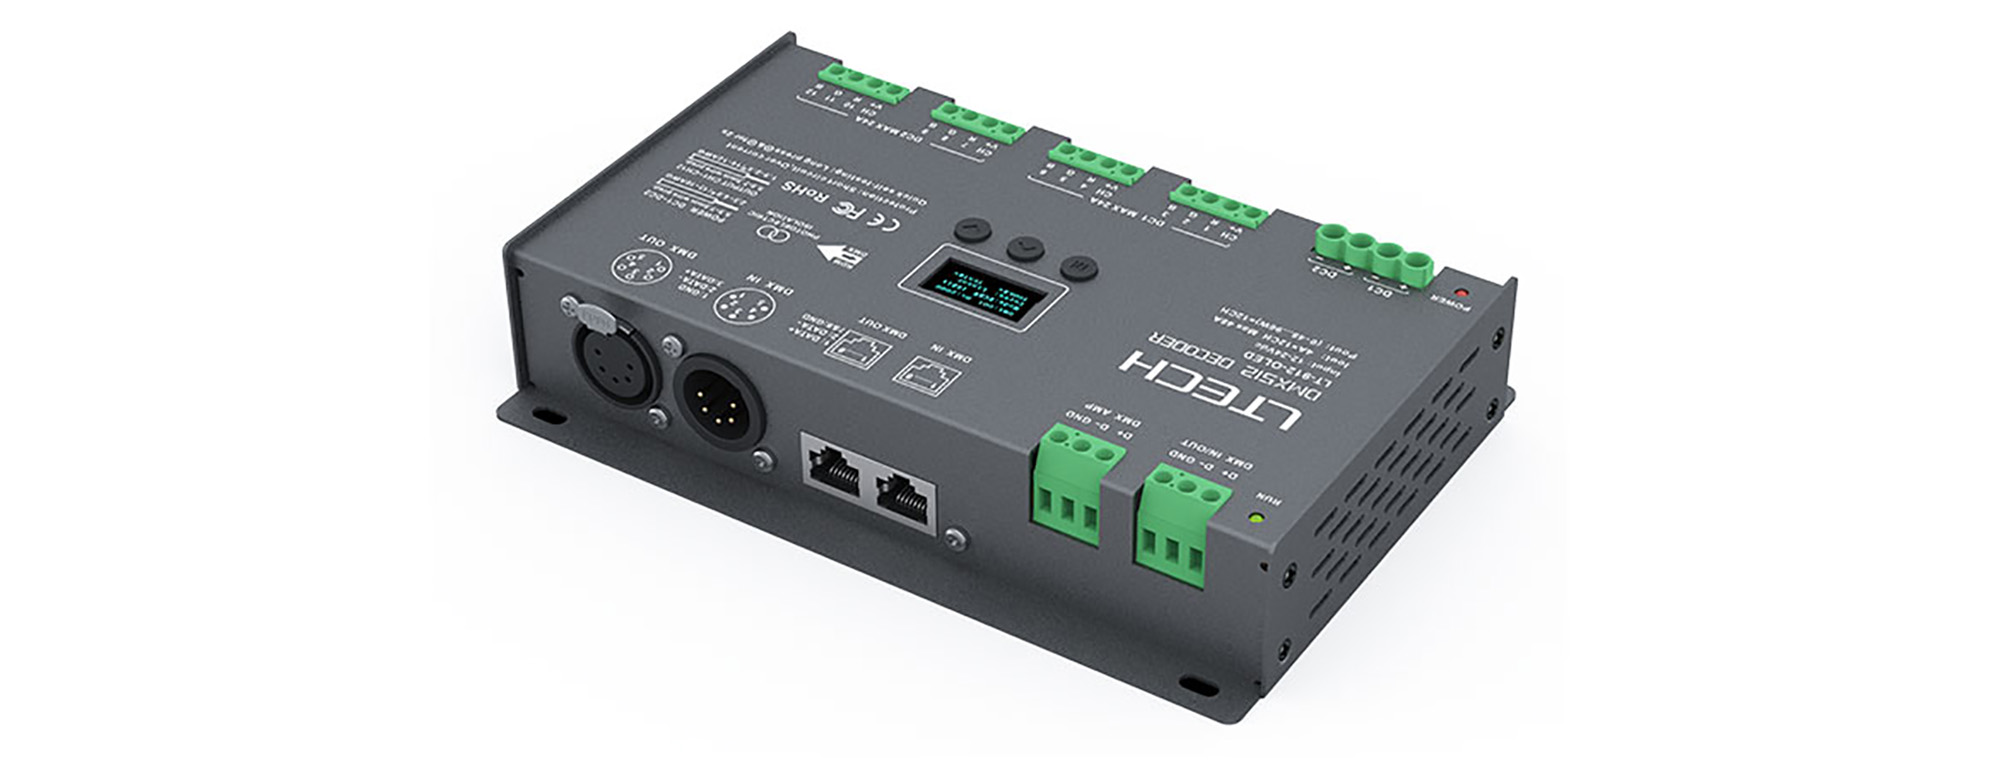 912-OLED  12Ch 4A CV DMX Decoder; 1152W Max.Power; XLR-5 Green Terminal & RJ45 Port; Self testing; DMX512/RDM I/P signal; IP20.